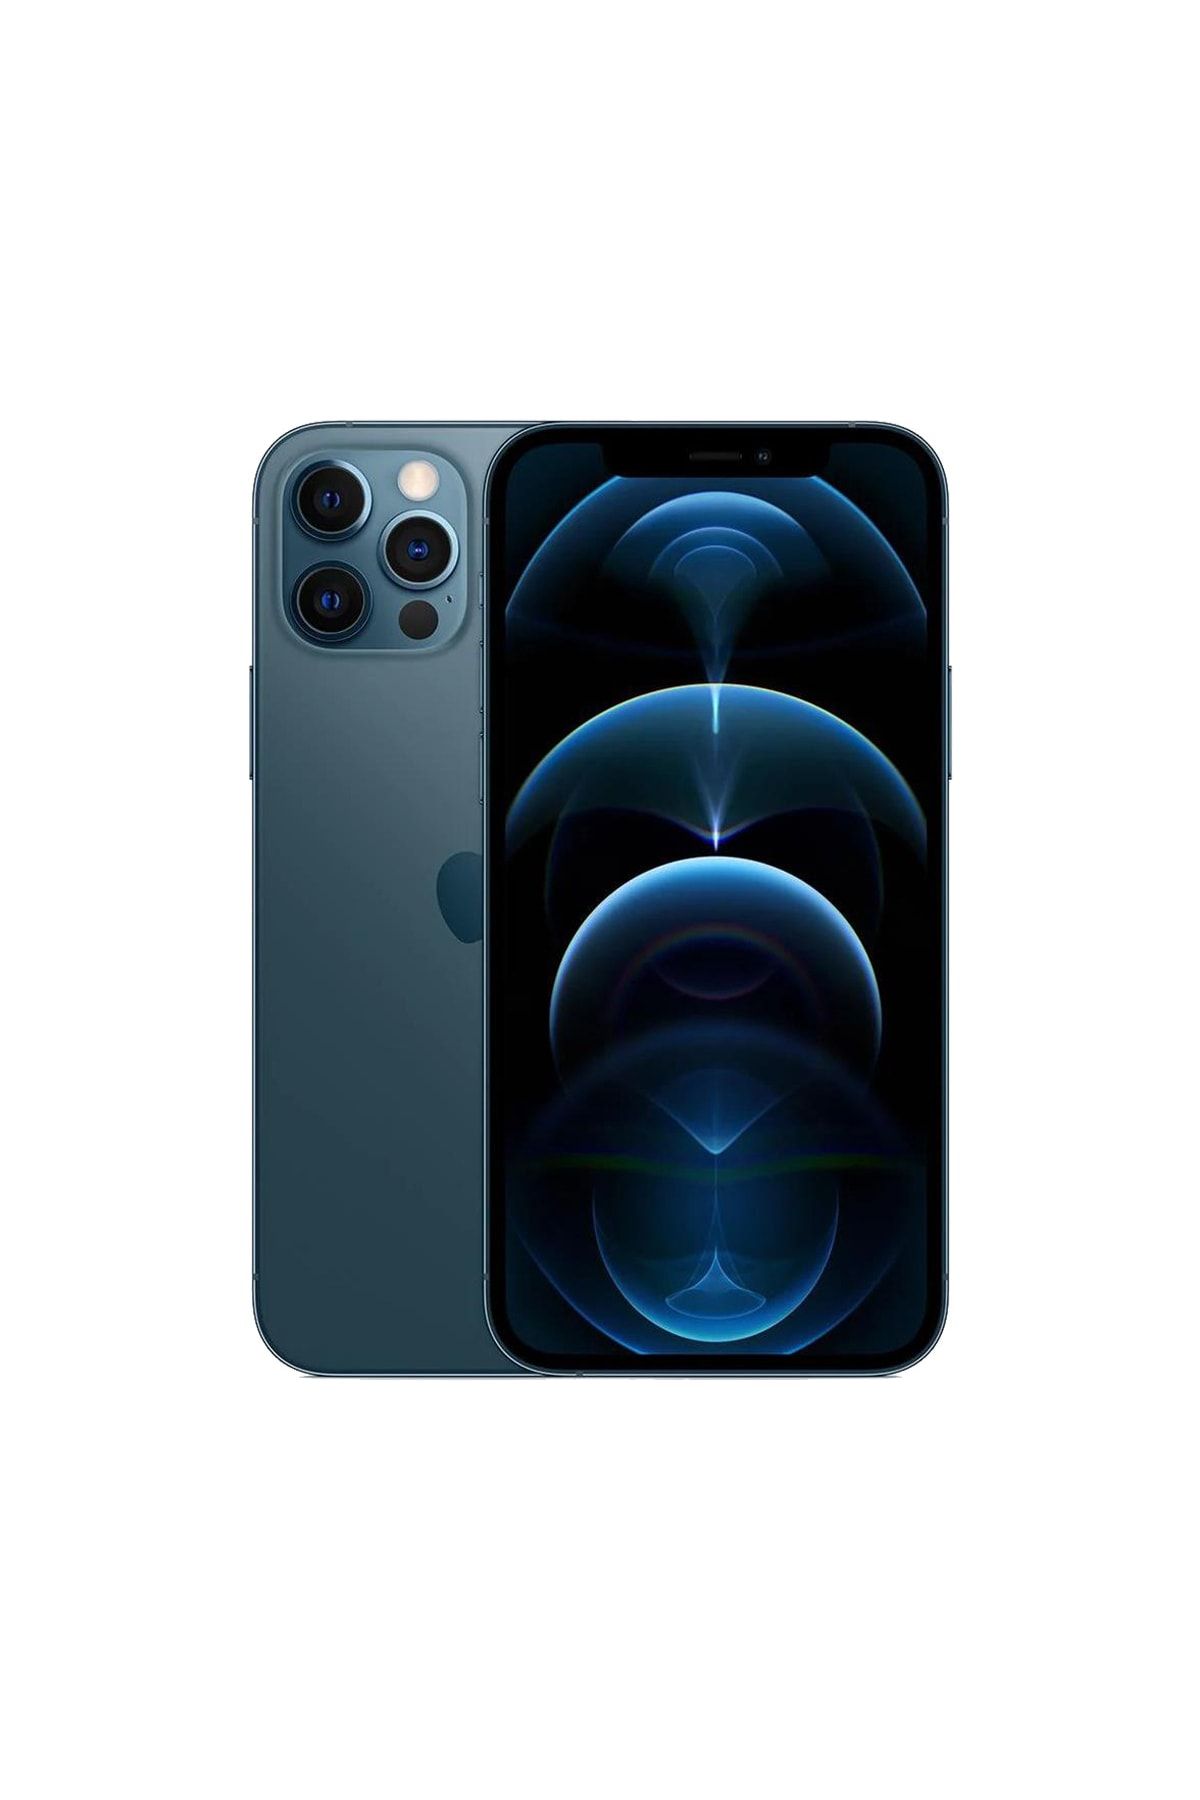 Apple Yenilenmiş iPhone 12 Pro Max 128 GB Pasifik Mavi Cep Telefonu (12 Ay Garantili) - B Kalite